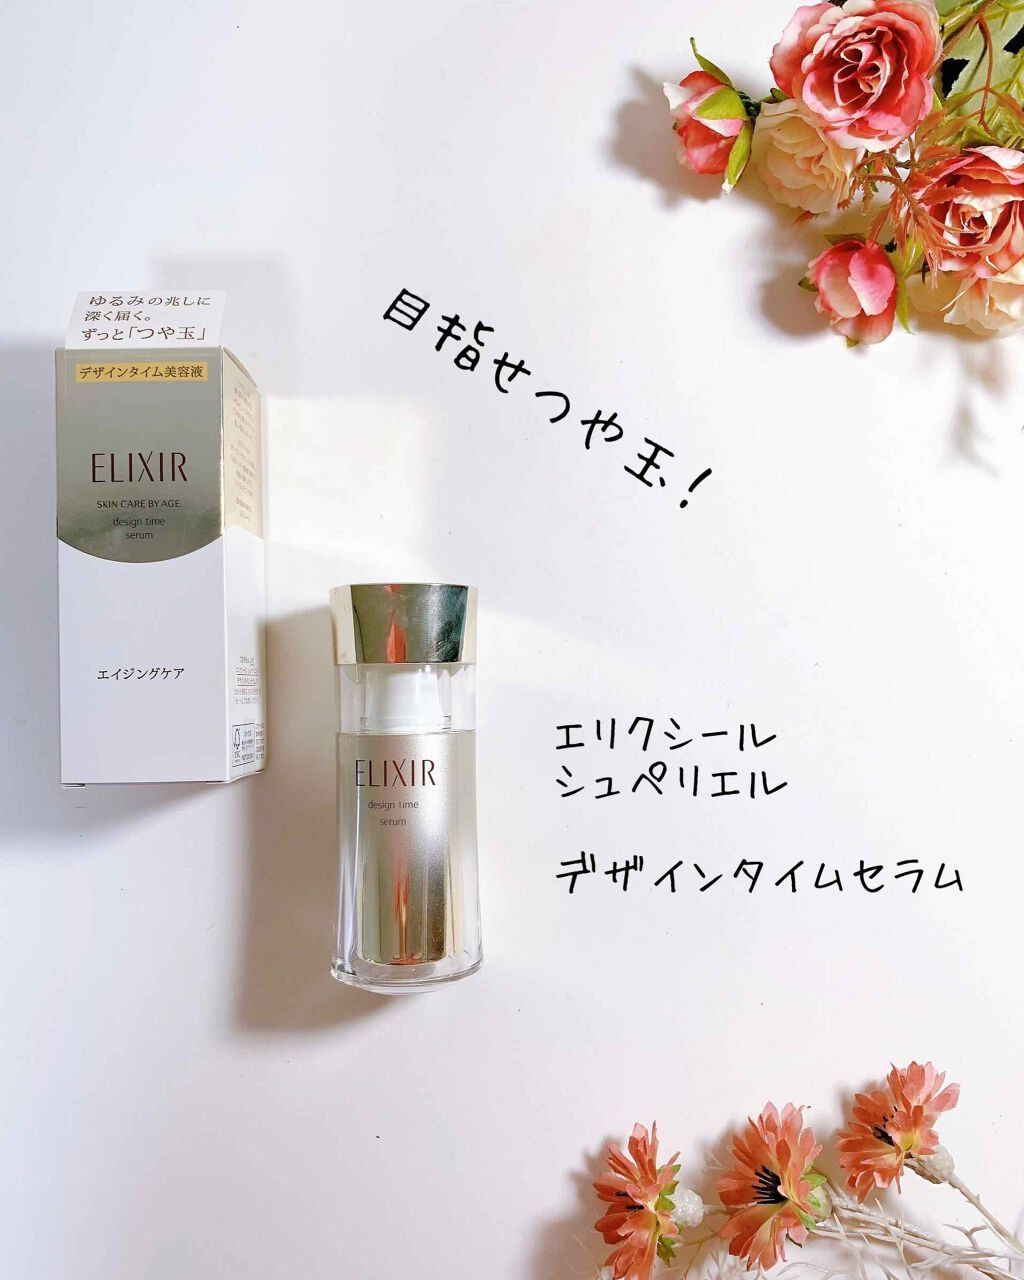 shiseido elixir design time serum review